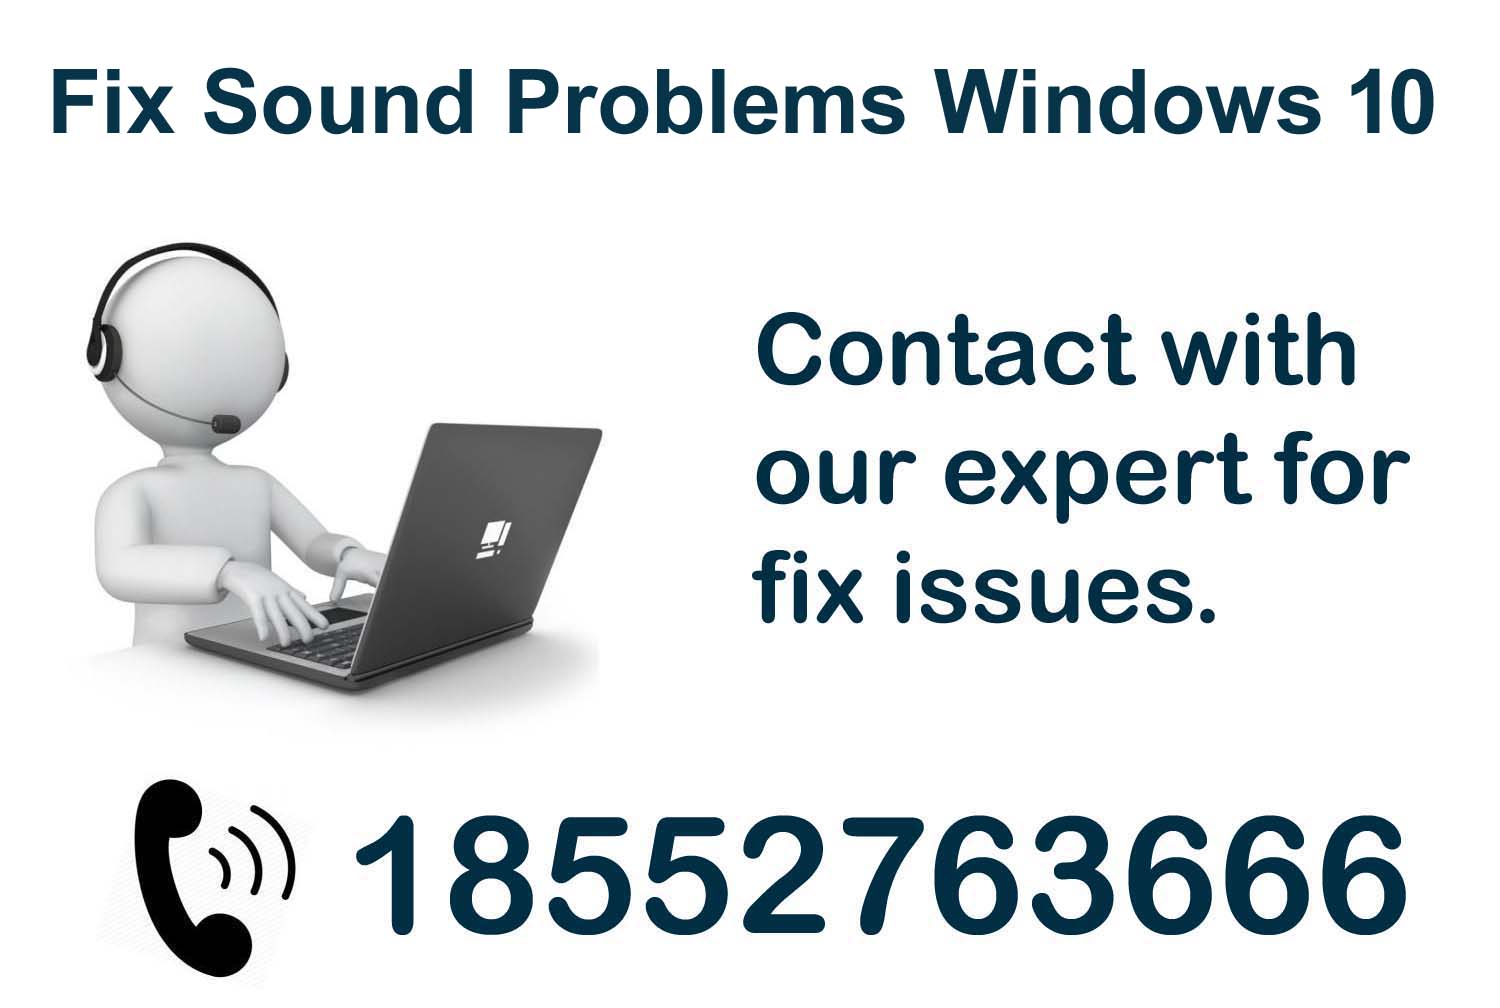 Fix Sound Problems Windows 10 Dial 1 855 276 3666